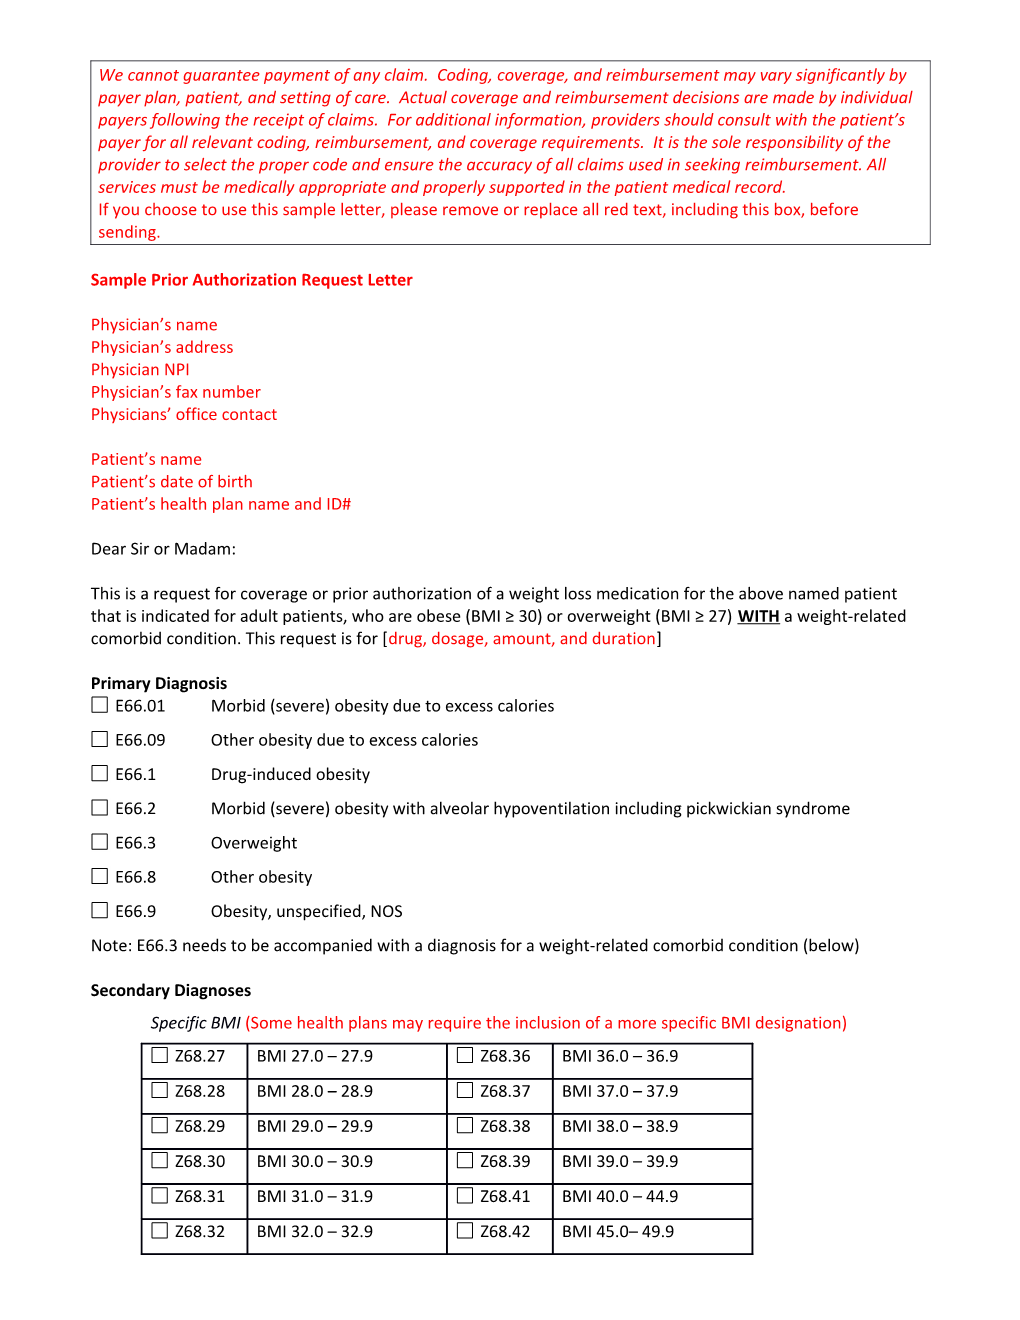 Sample Prior-Authorization Request Letter